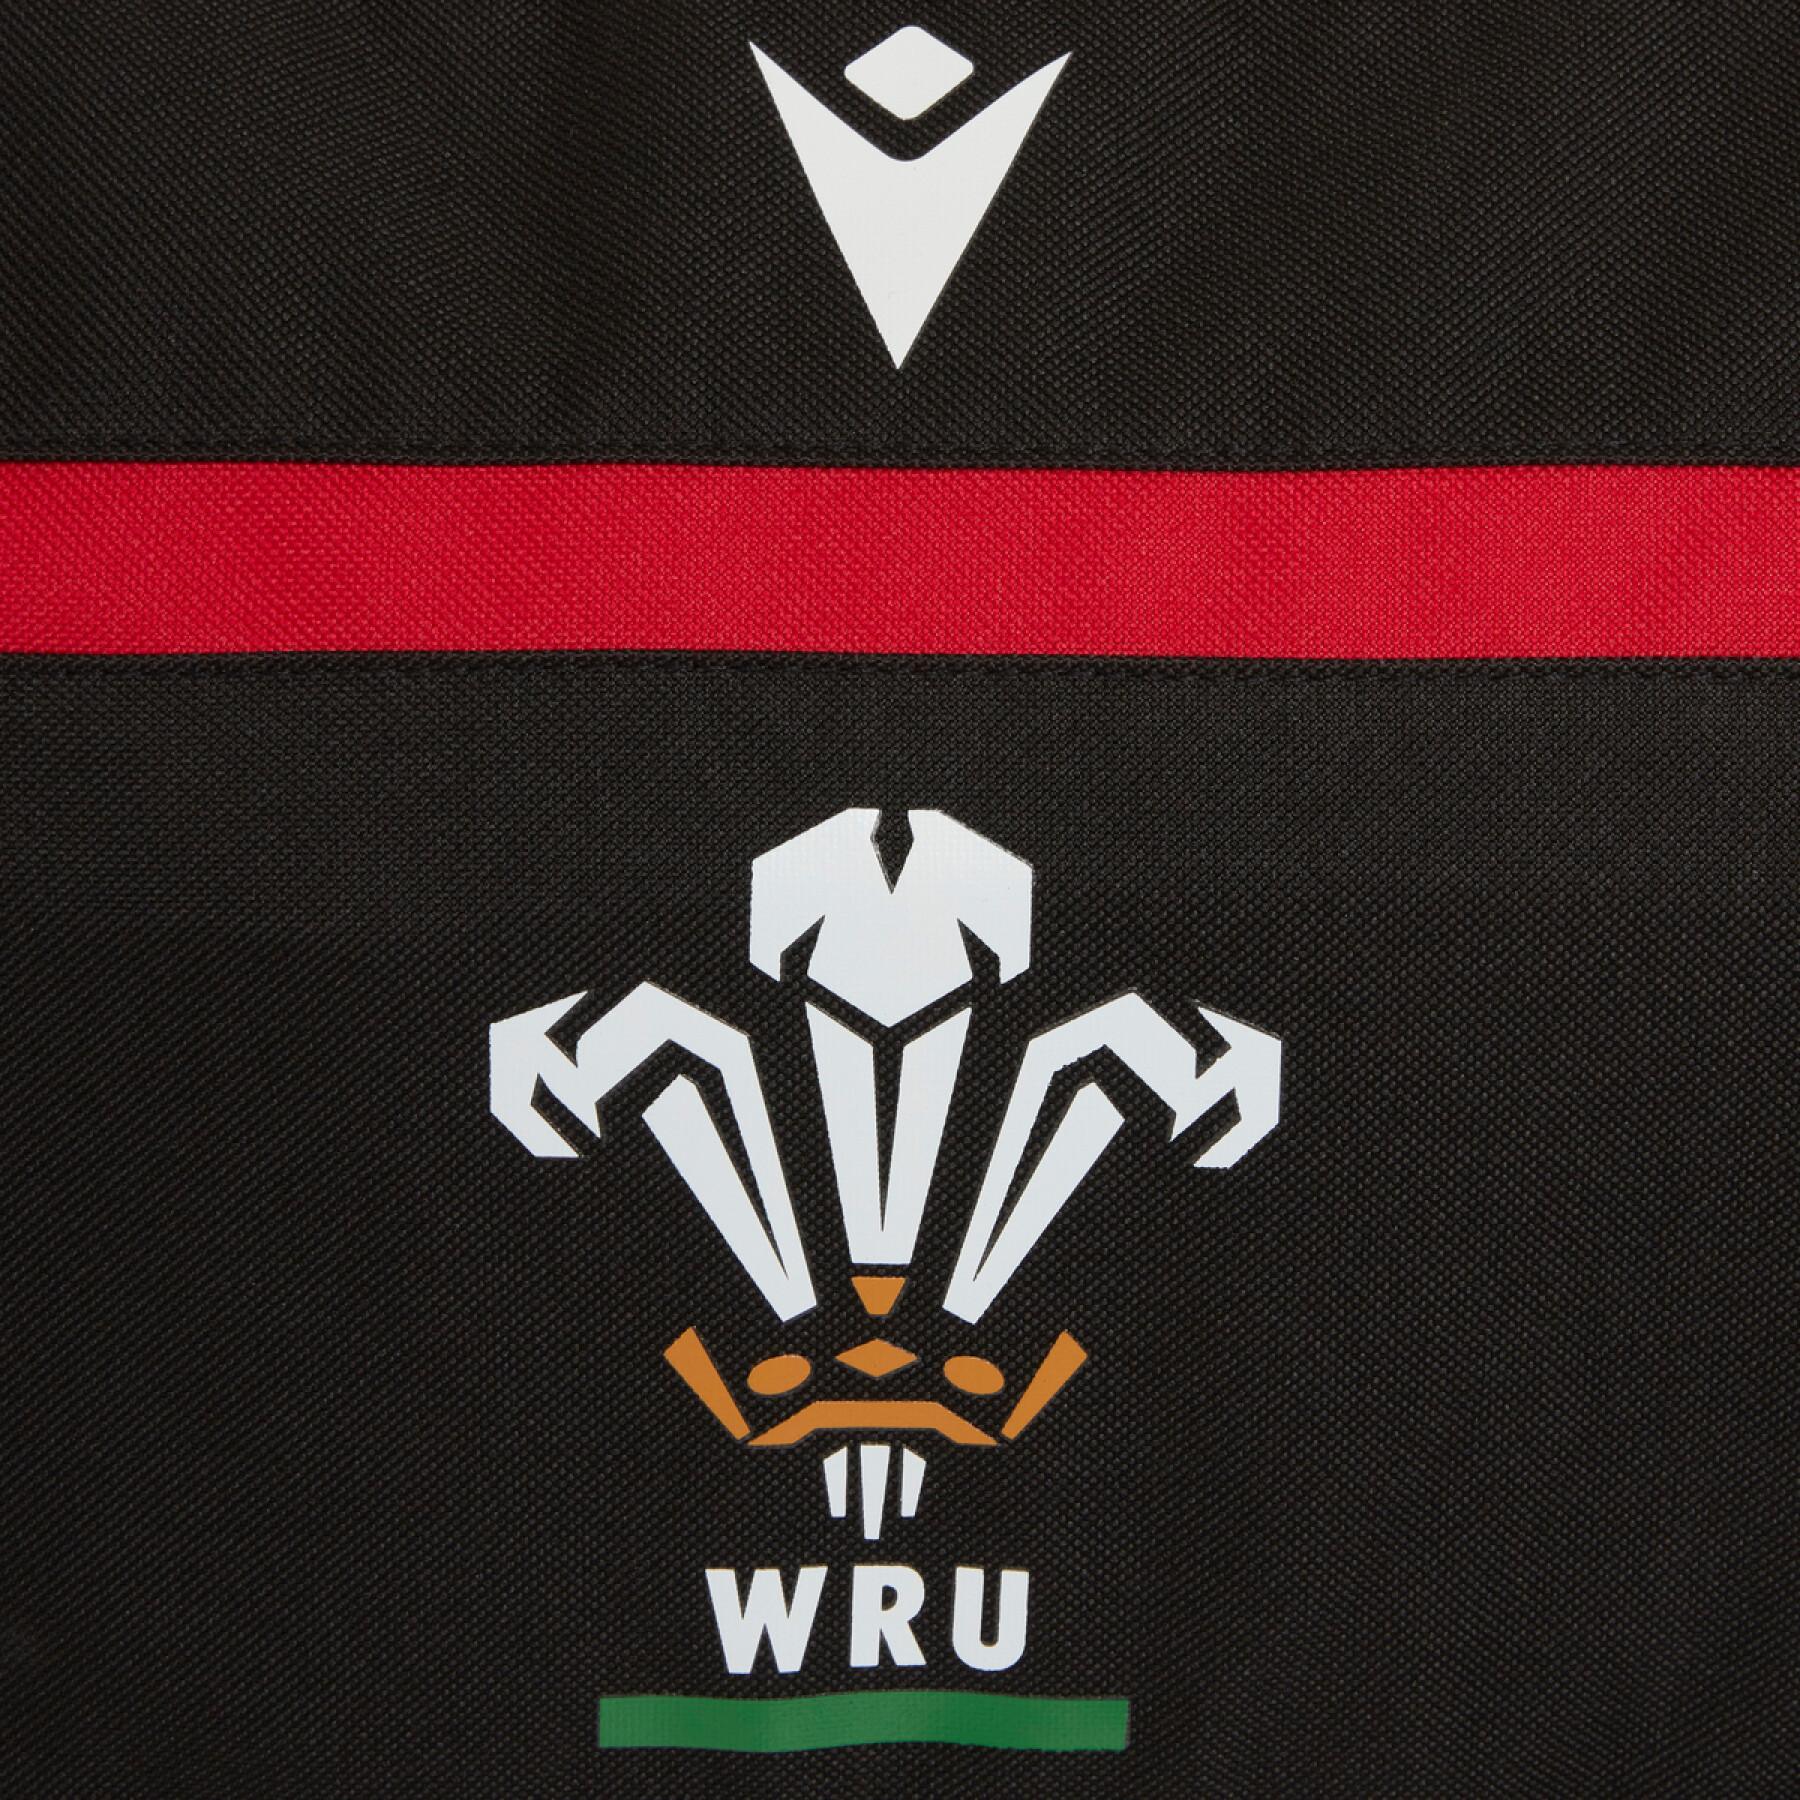 Torba sportowa Pays de Galles rugby 2020/21